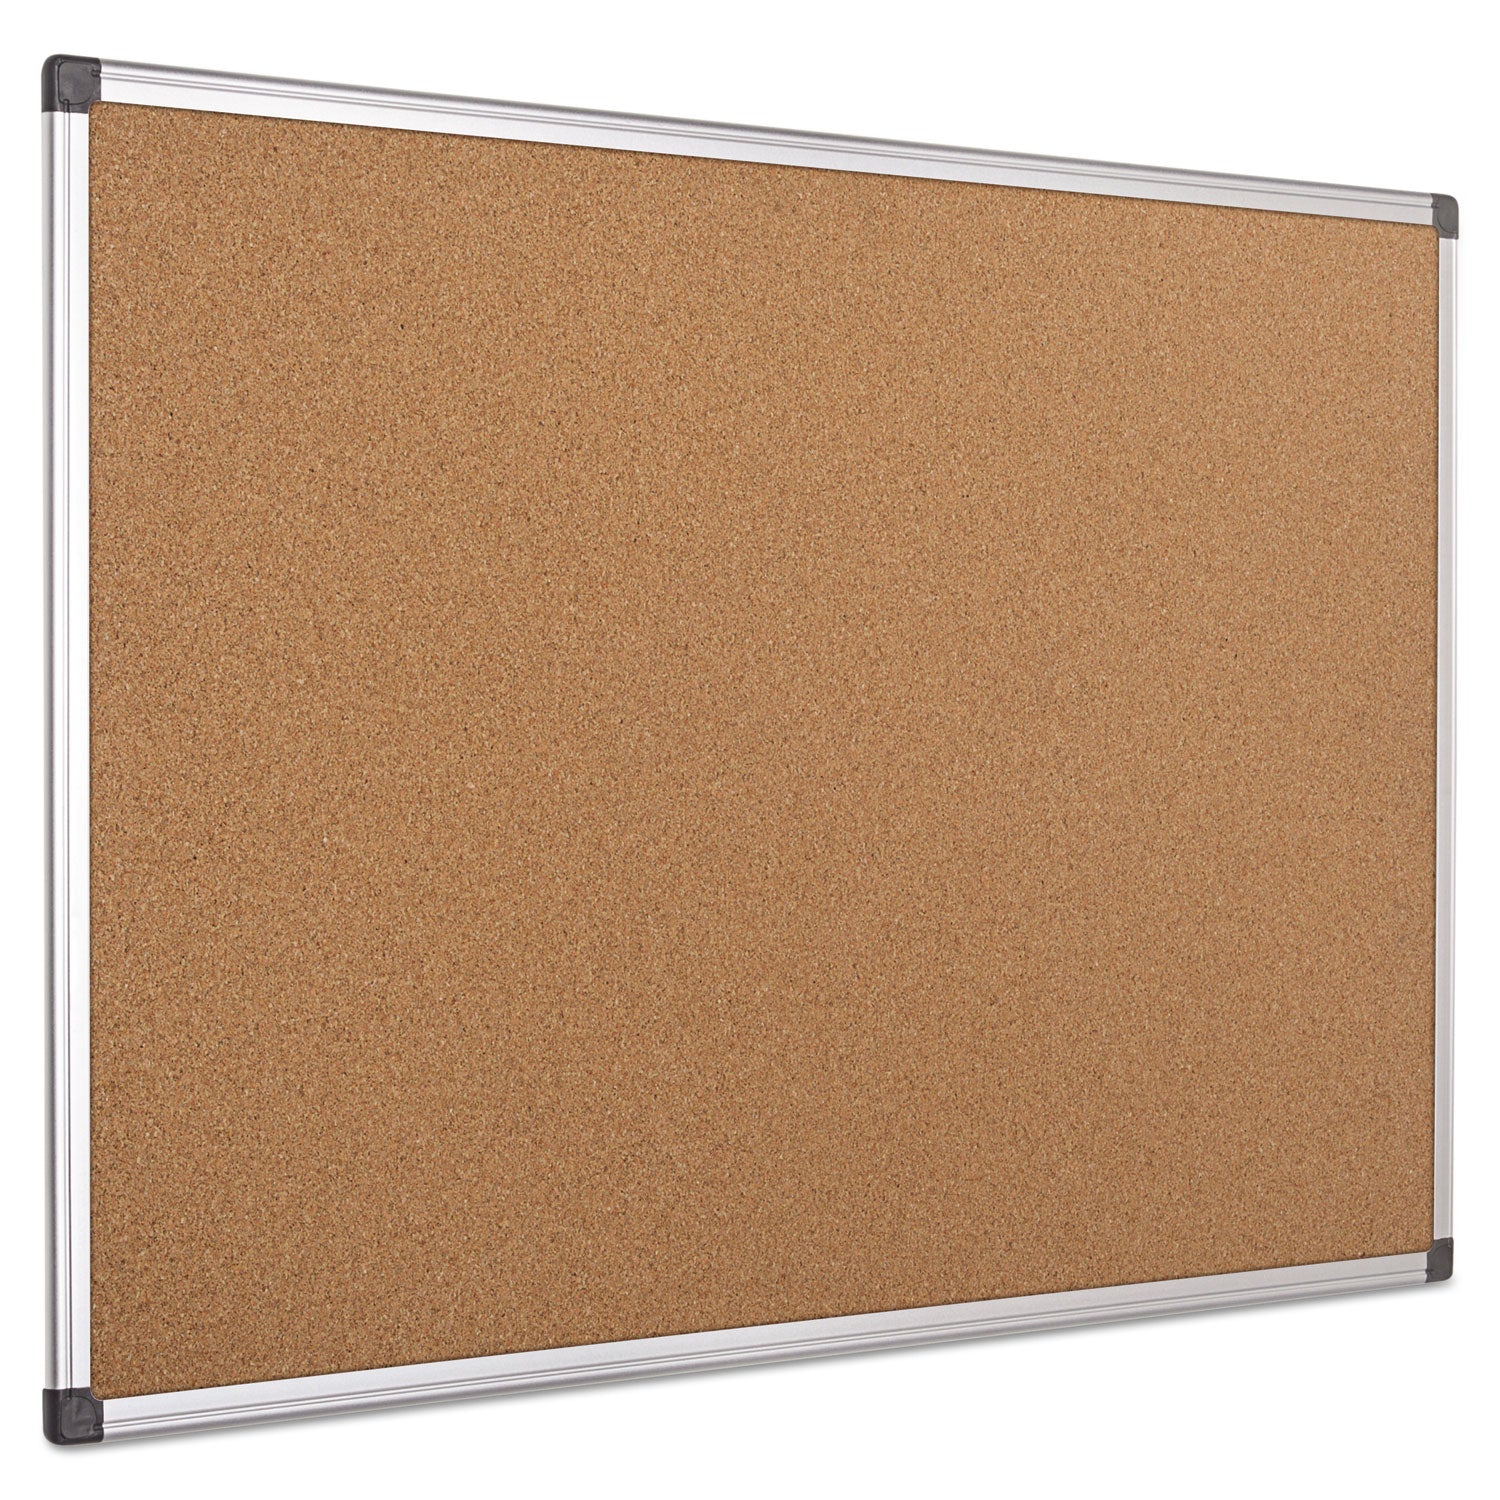 Value Cork Bulletin Board with Aluminum Frame, 24 x 36, Tan Surface, Silver Aluminum Frame - 